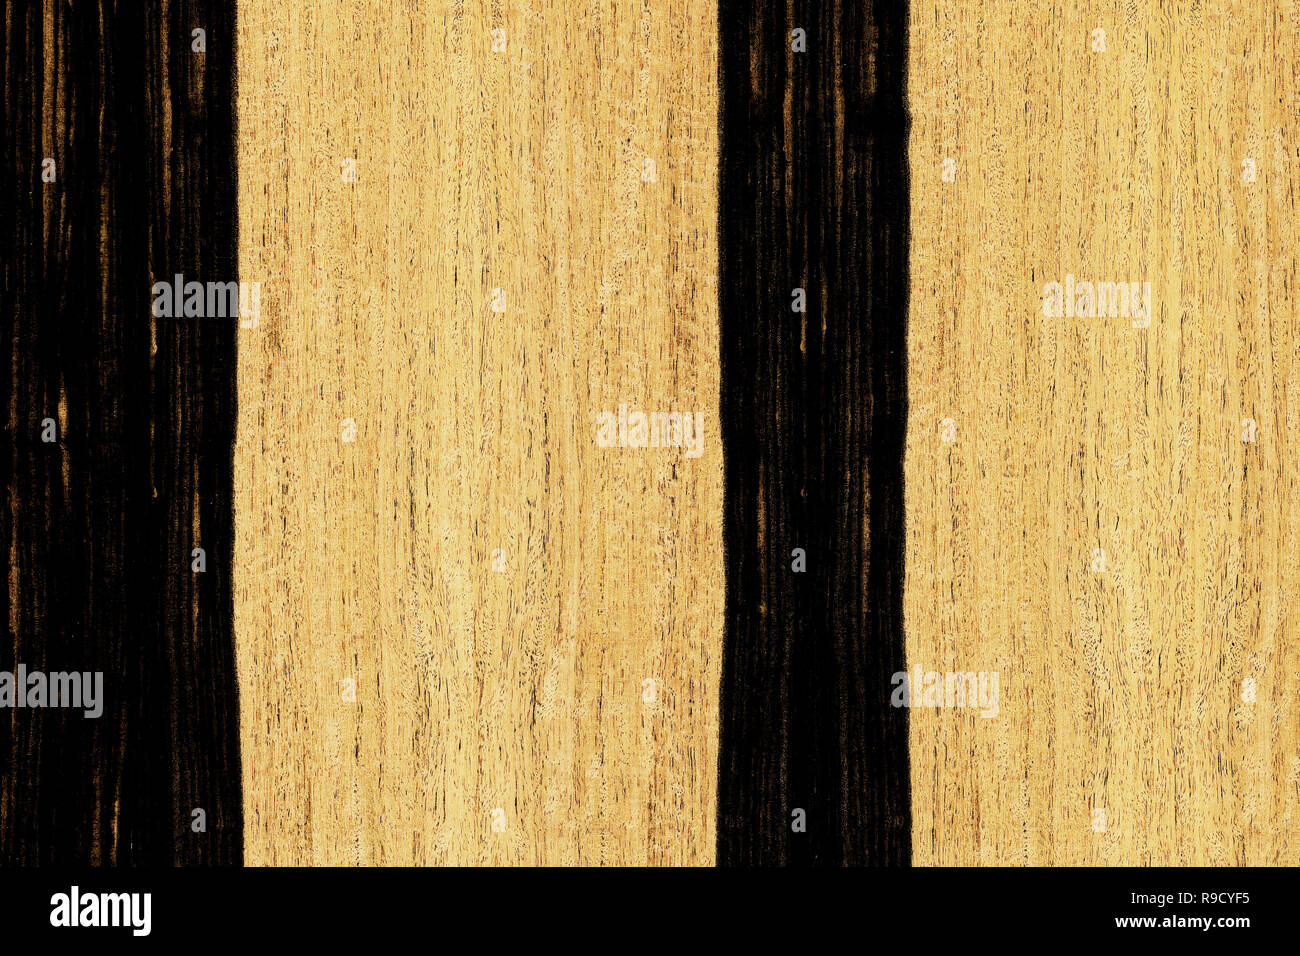 Ebony wood hi-res stock photography and images - Alamy